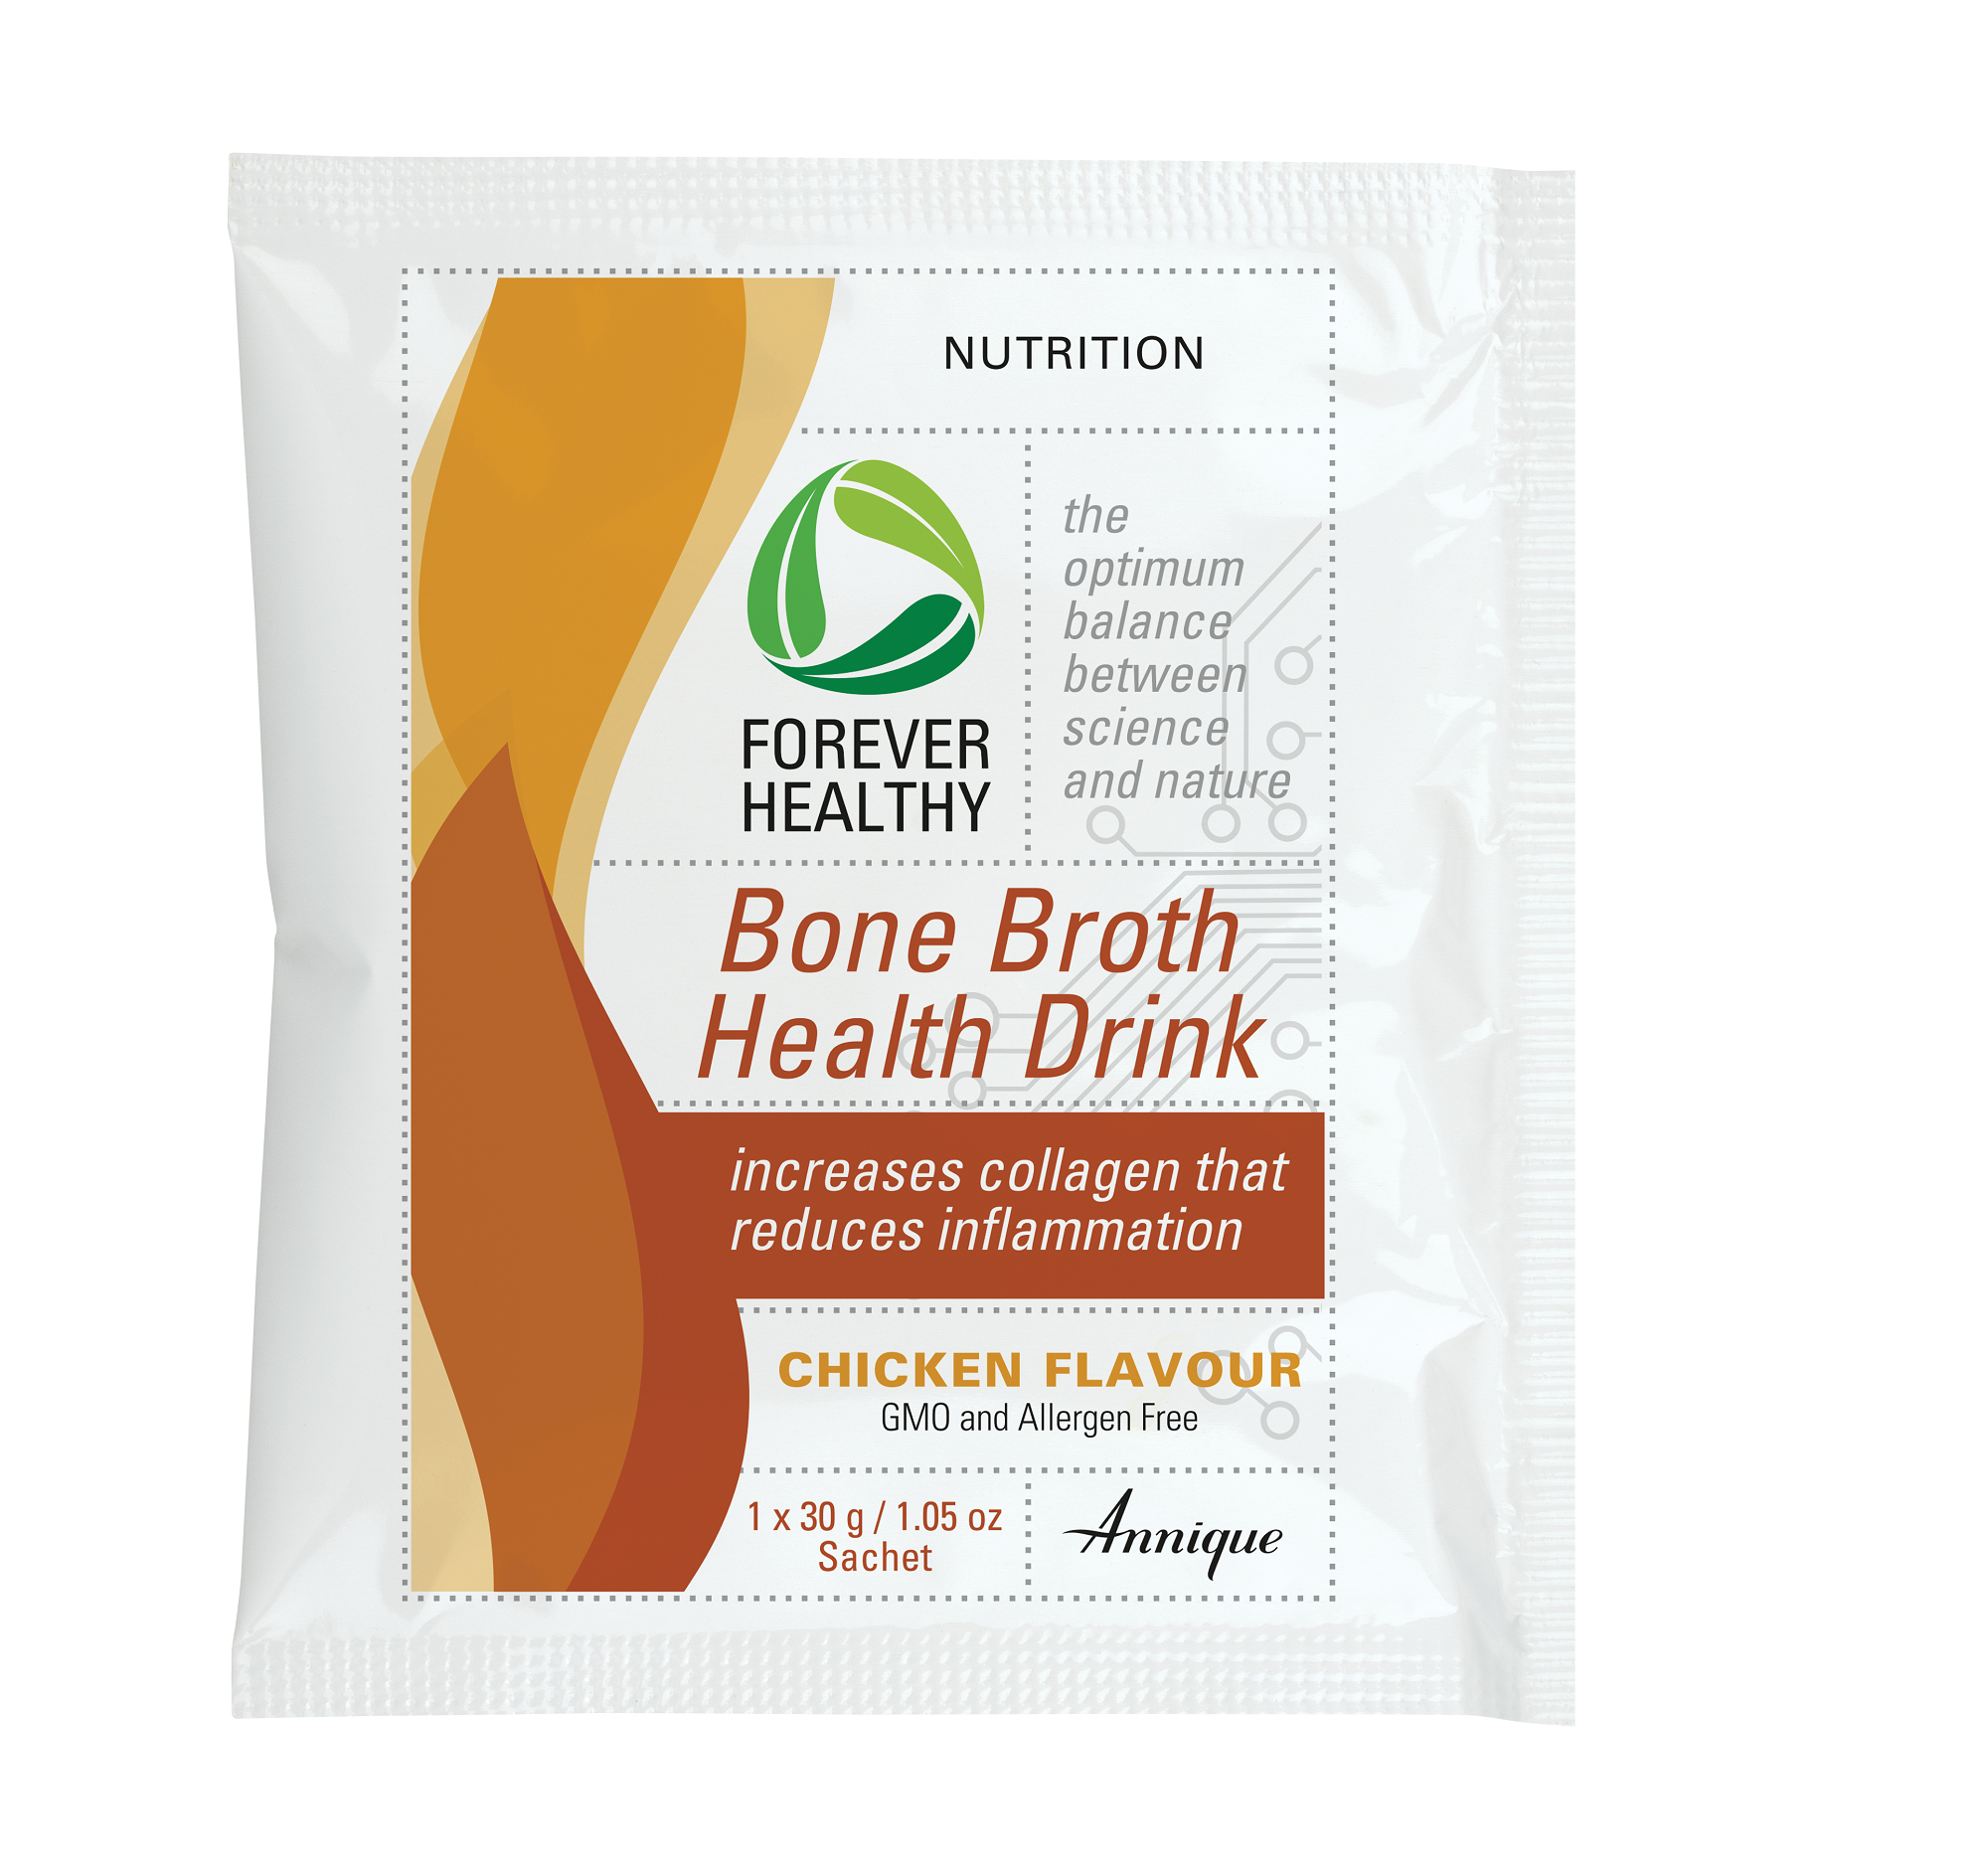 Bone Broth Health Drink – 30g sachet